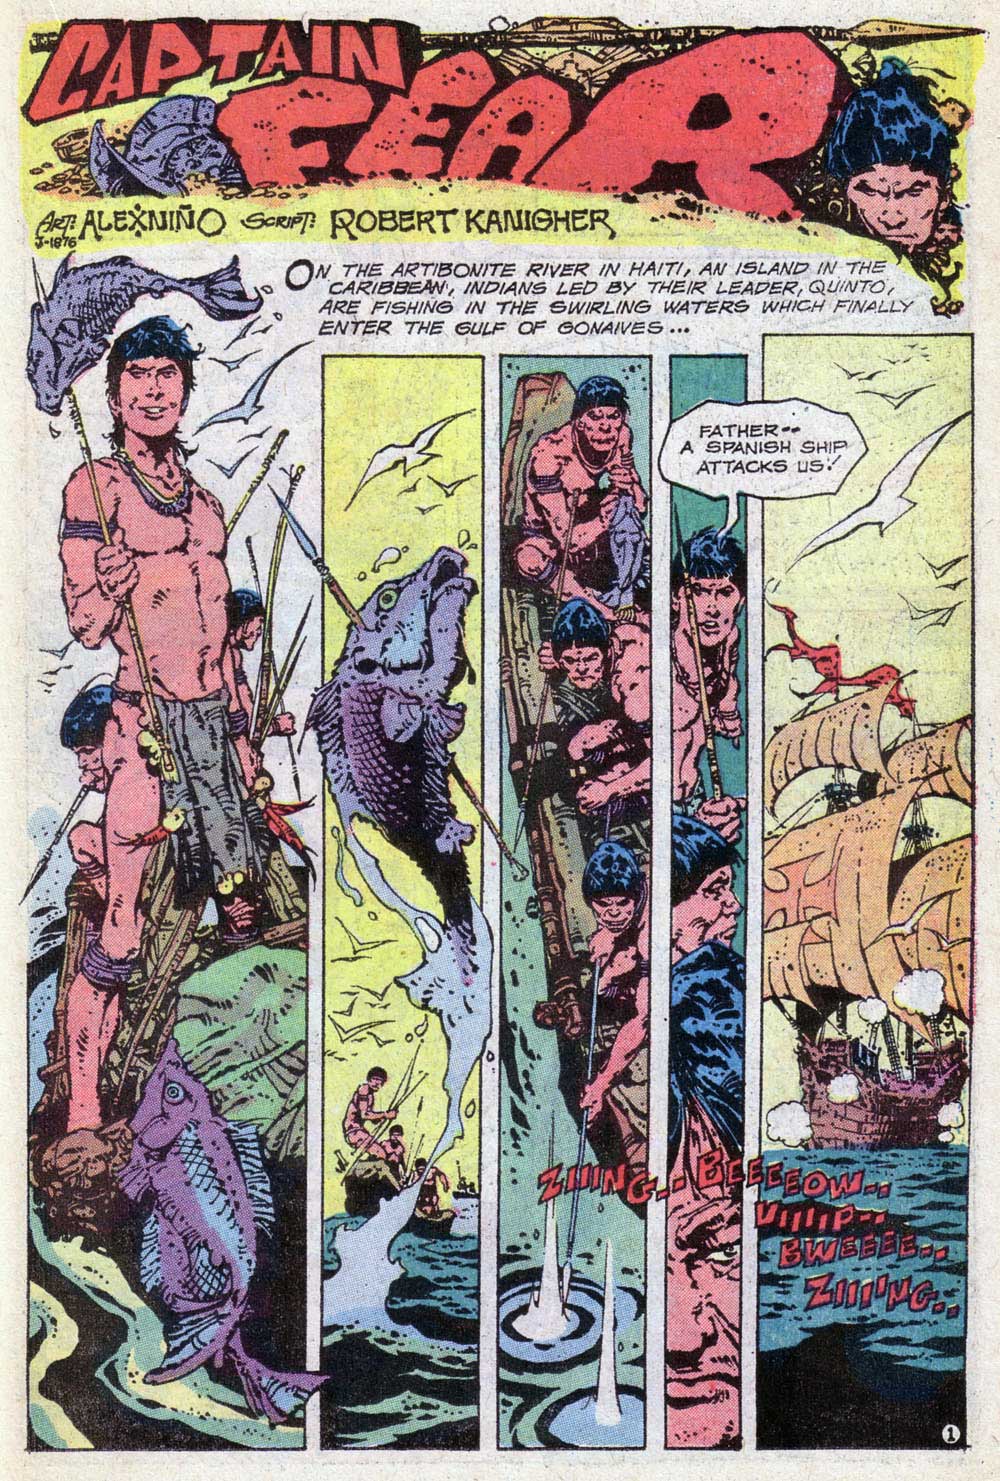 Adventure Comics #425 (1972) by Robert Kanigher and Alex Nino